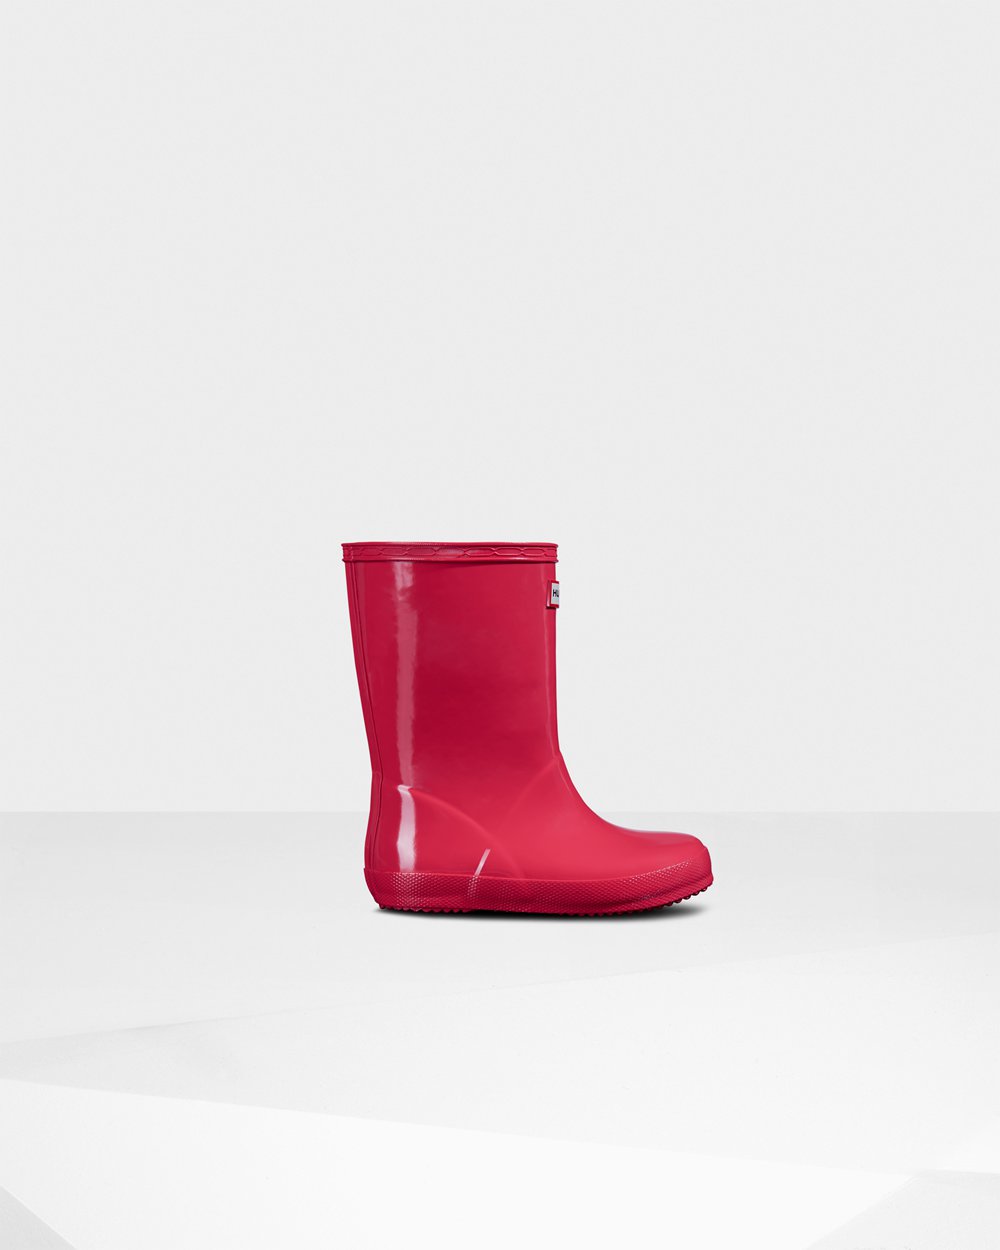 Kids Rain Boots - Hunter Original First Classic Gloss (01ZEBAQFD) - Pink